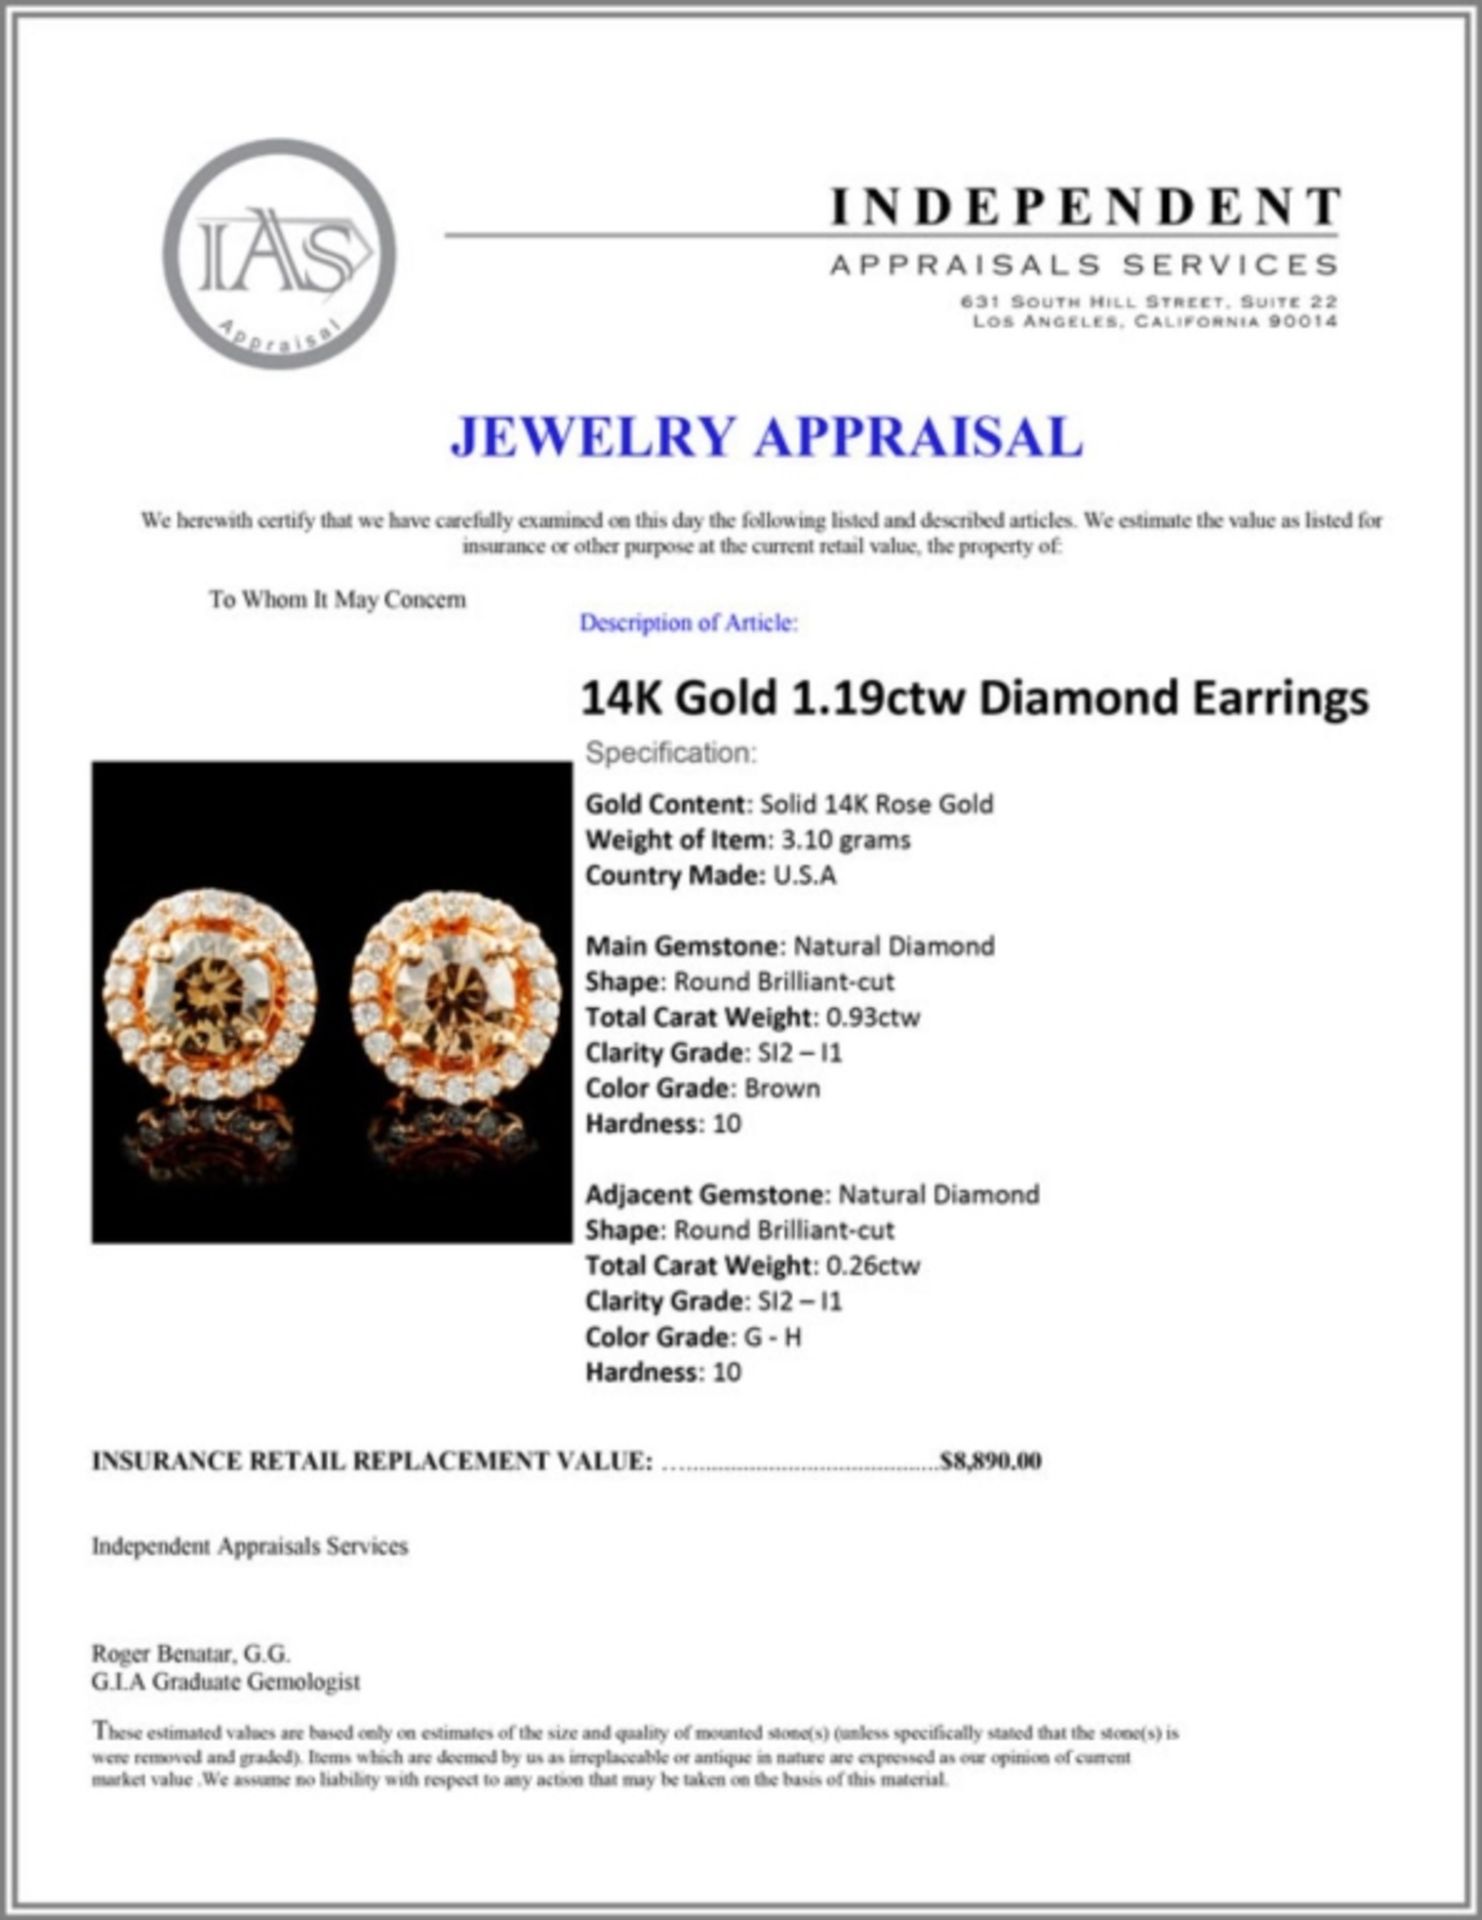 14K Gold 1.19ctw Diamond Earrings - Image 3 of 3